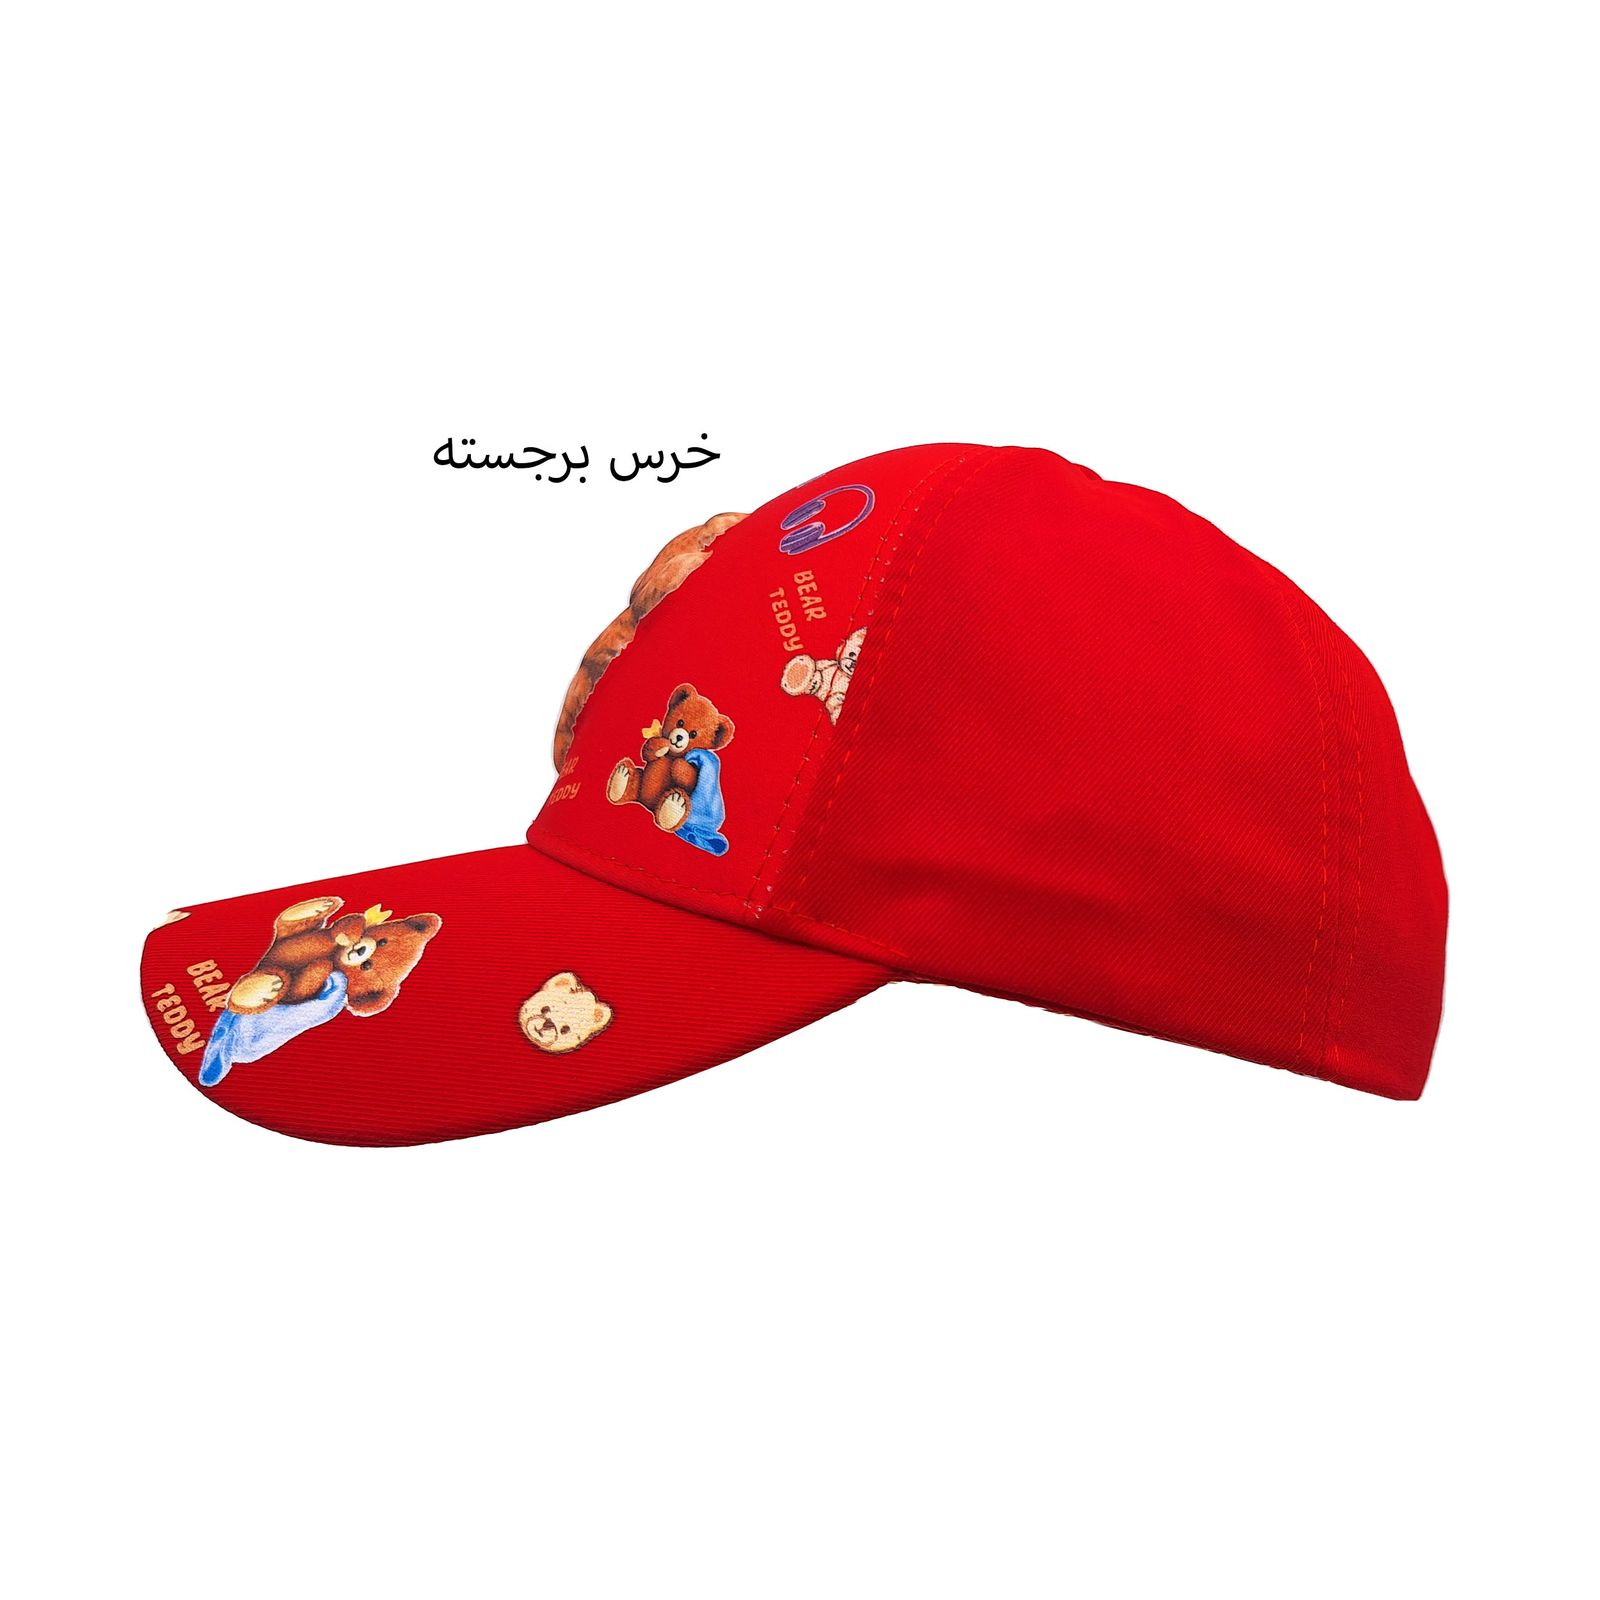 کلاه کپ پسرانه مدل خرس برجسته کد 1143 رنگ قرمز -  - 2